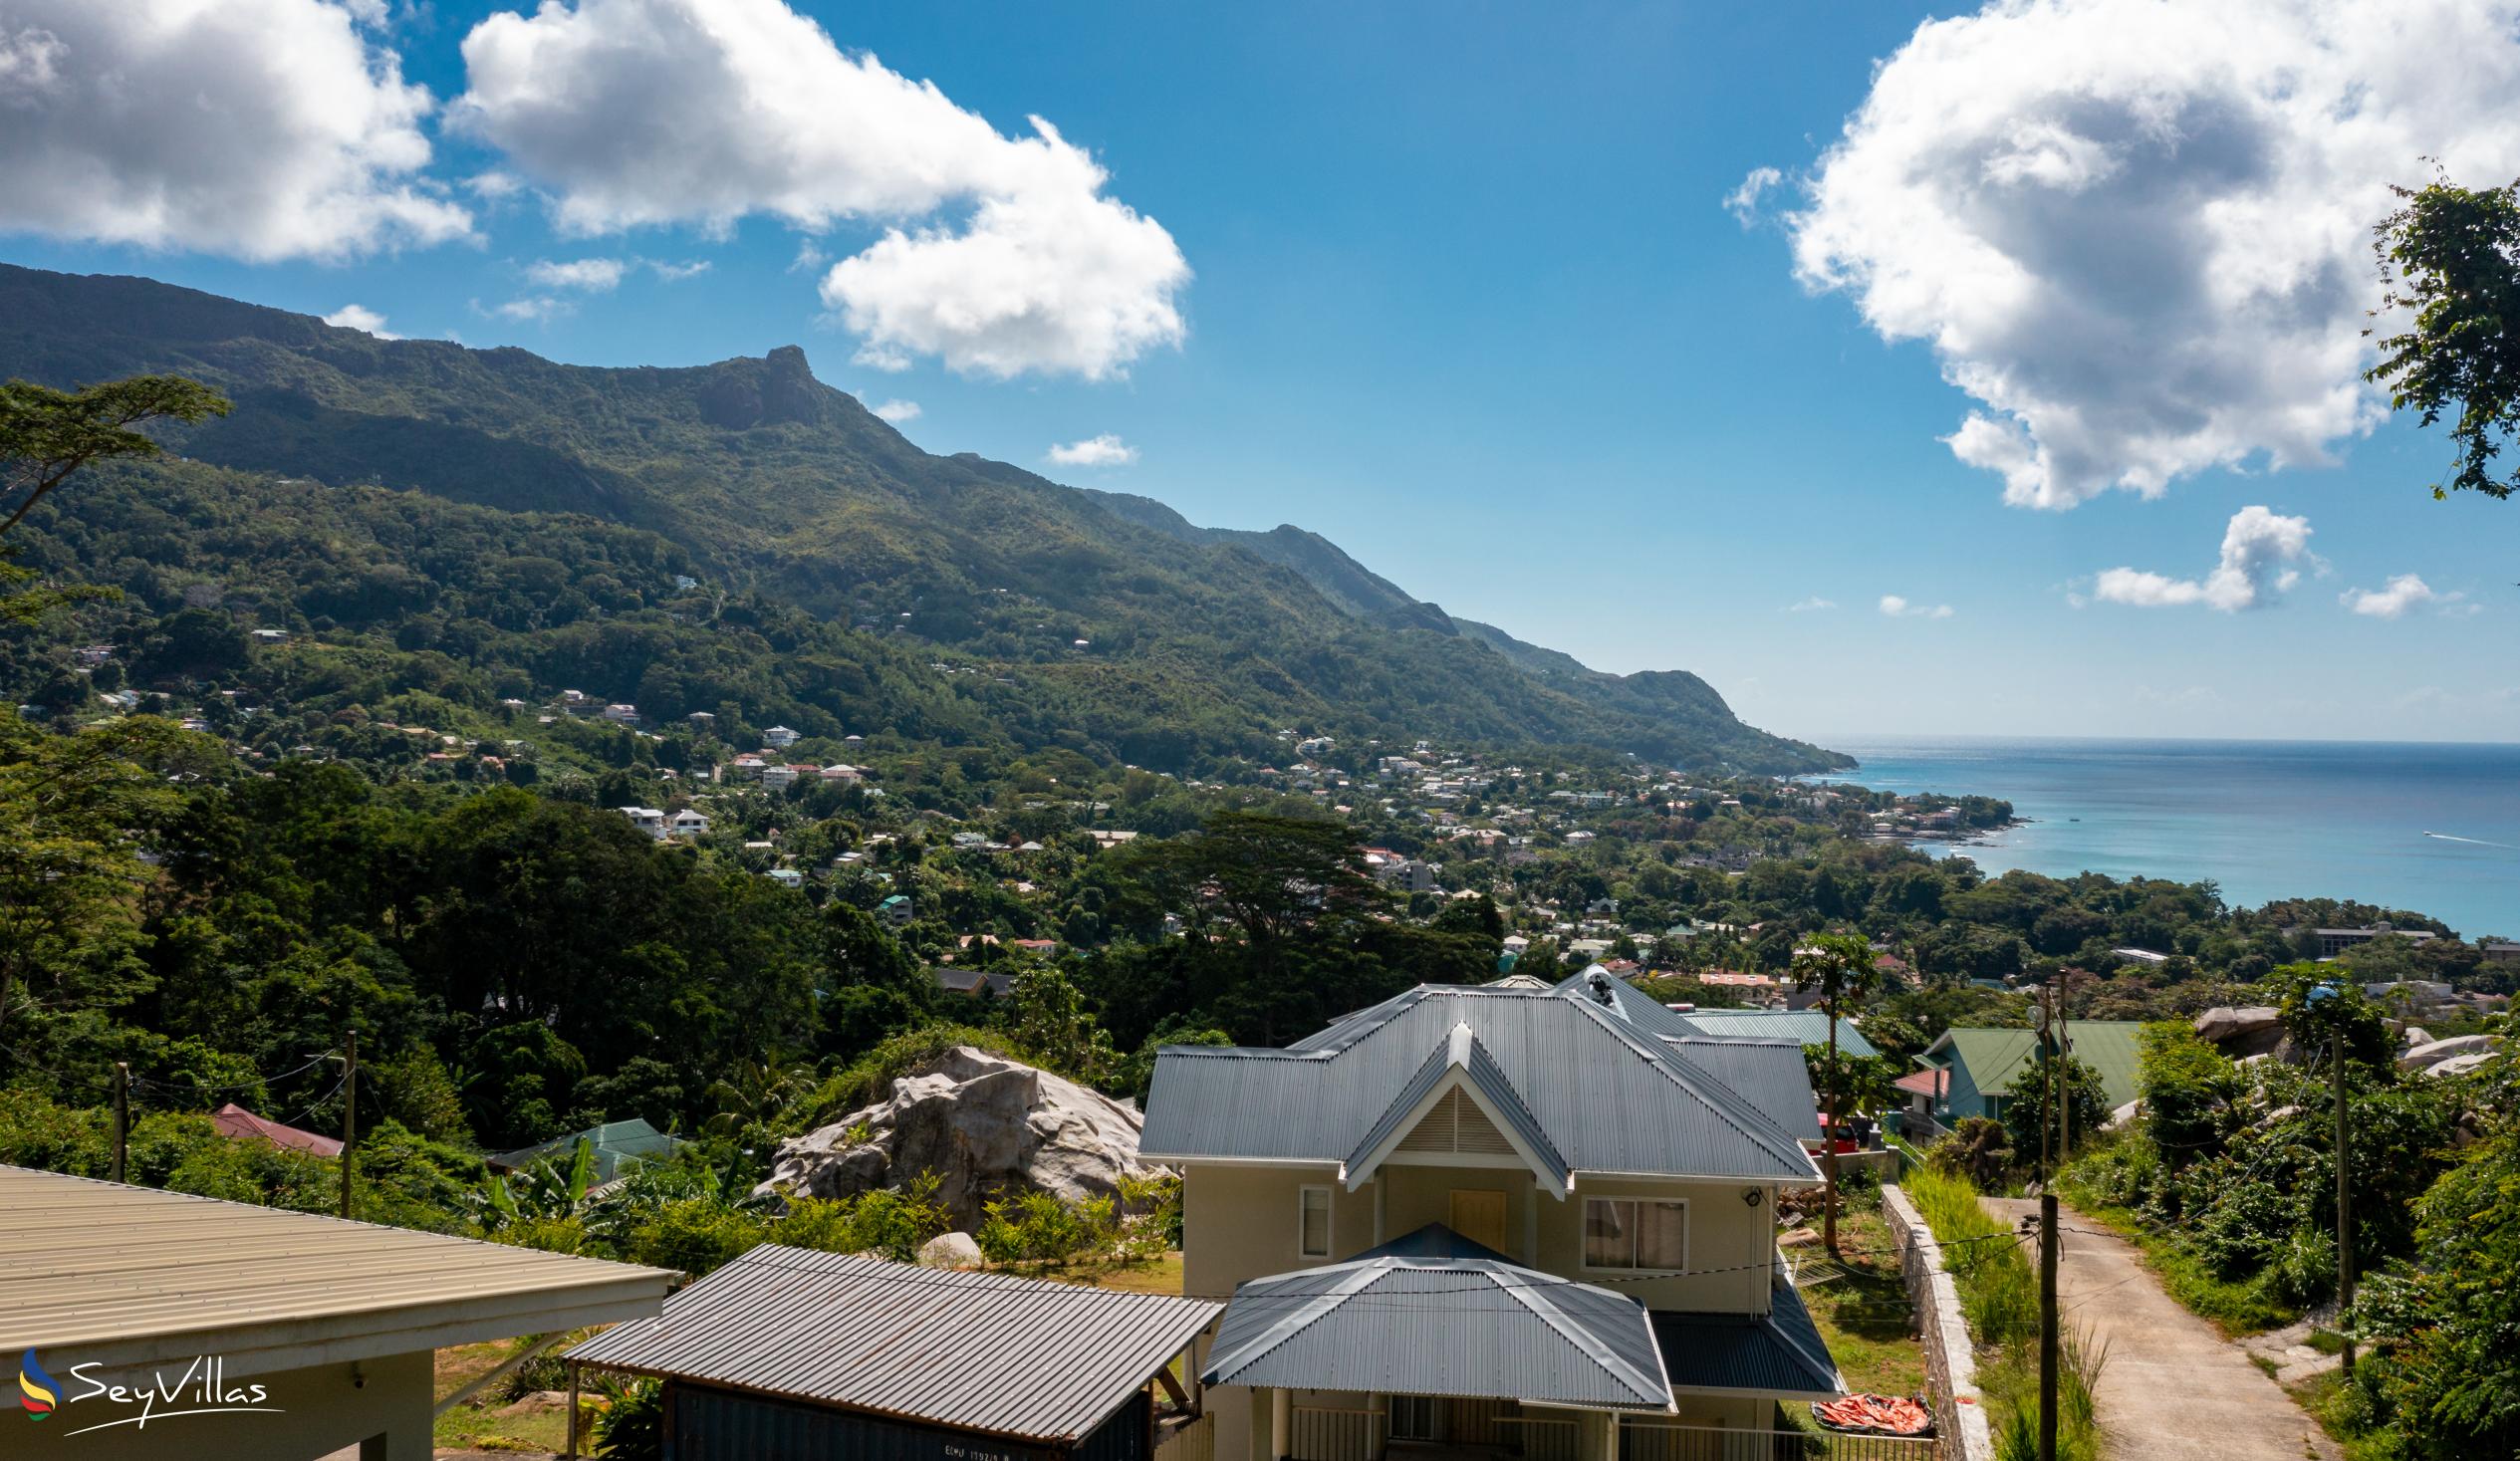 Foto 24: Roz Avel Villa - Lage - Mahé (Seychellen)